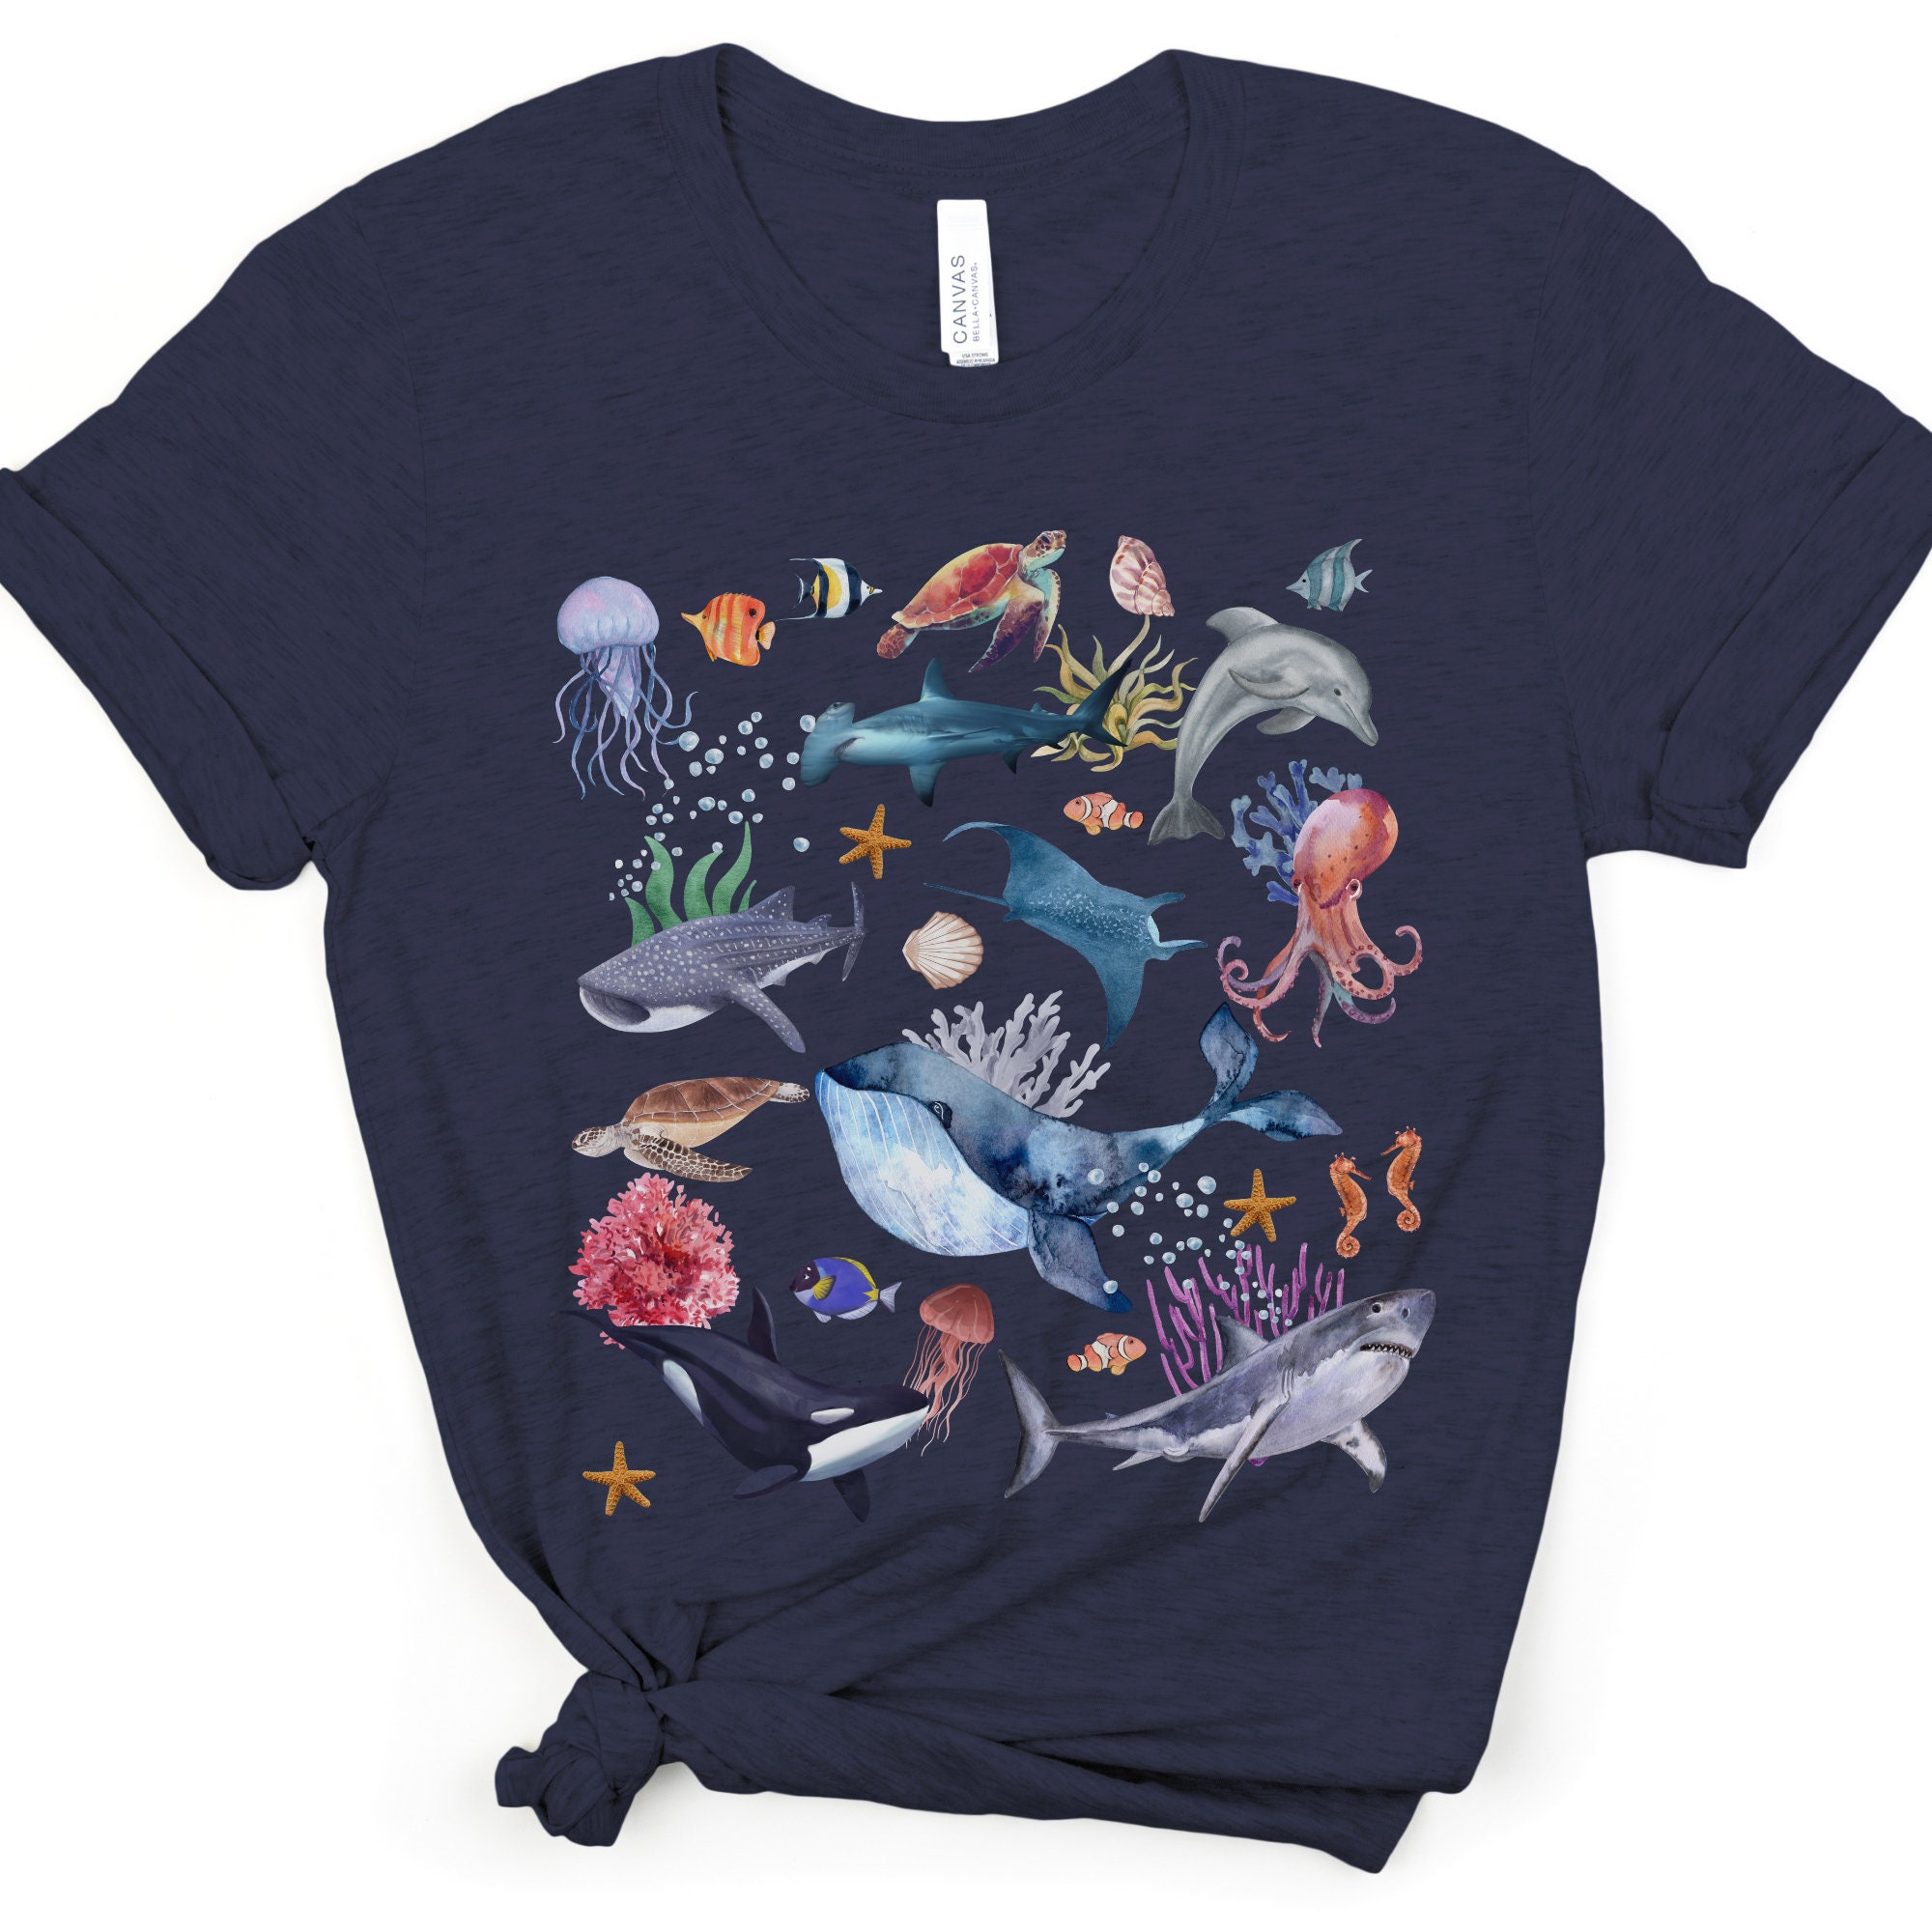 Marine Life Shirt, Marine Conservation, Save the Ocean